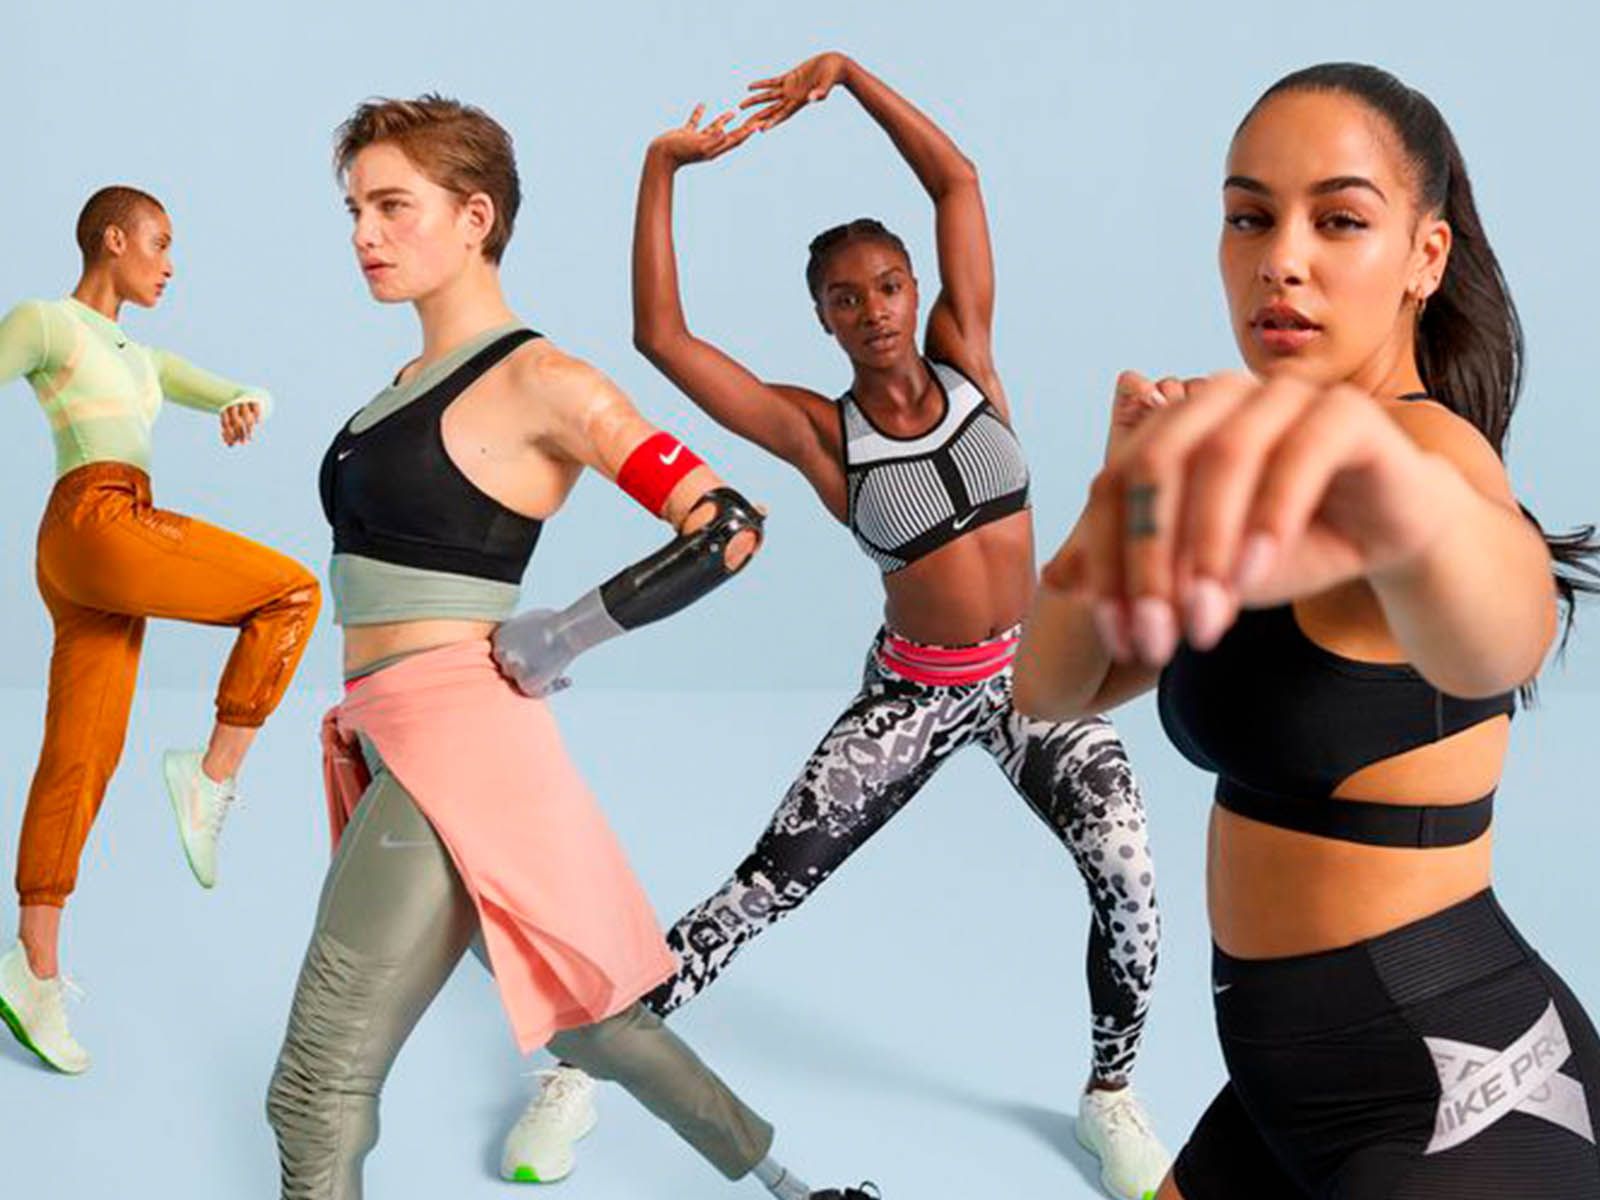 Employees denounce sexist behaviour at Nike